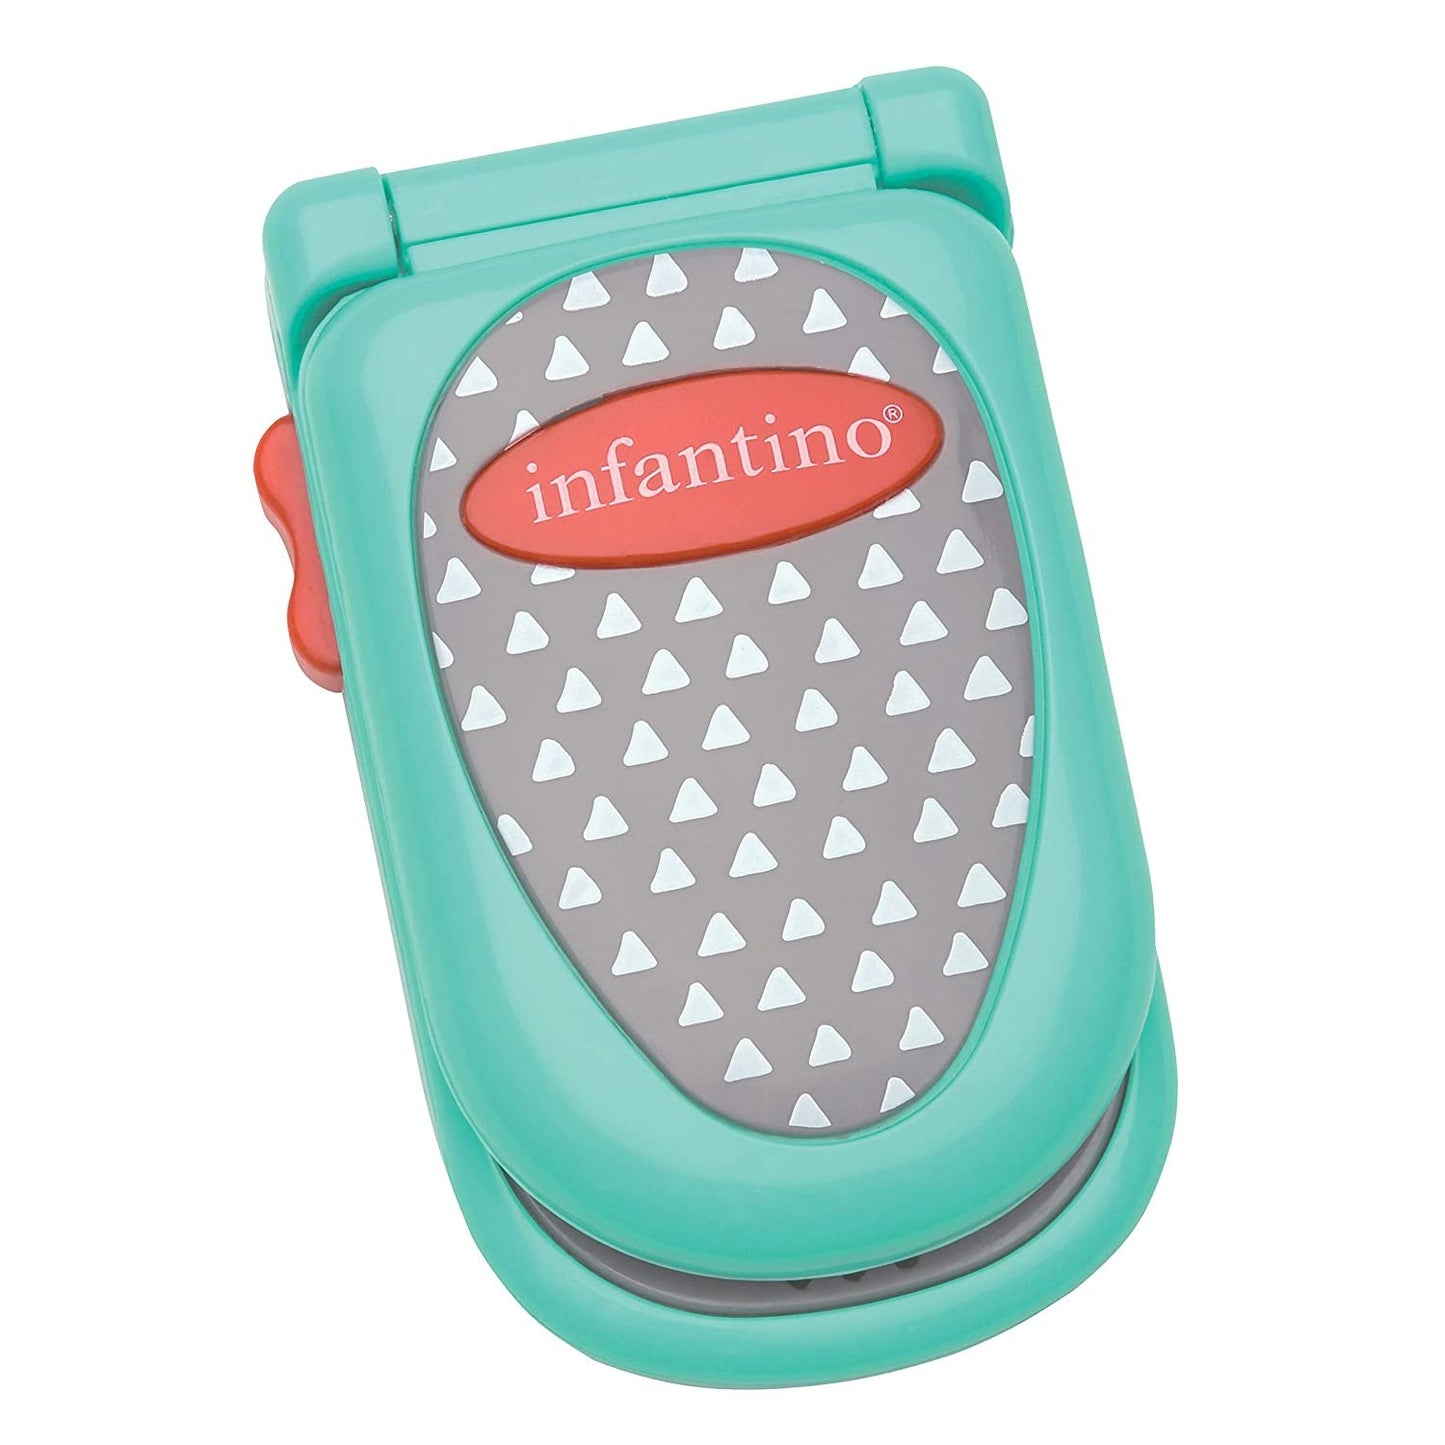 Infantino Flip and Peek Fun Phone